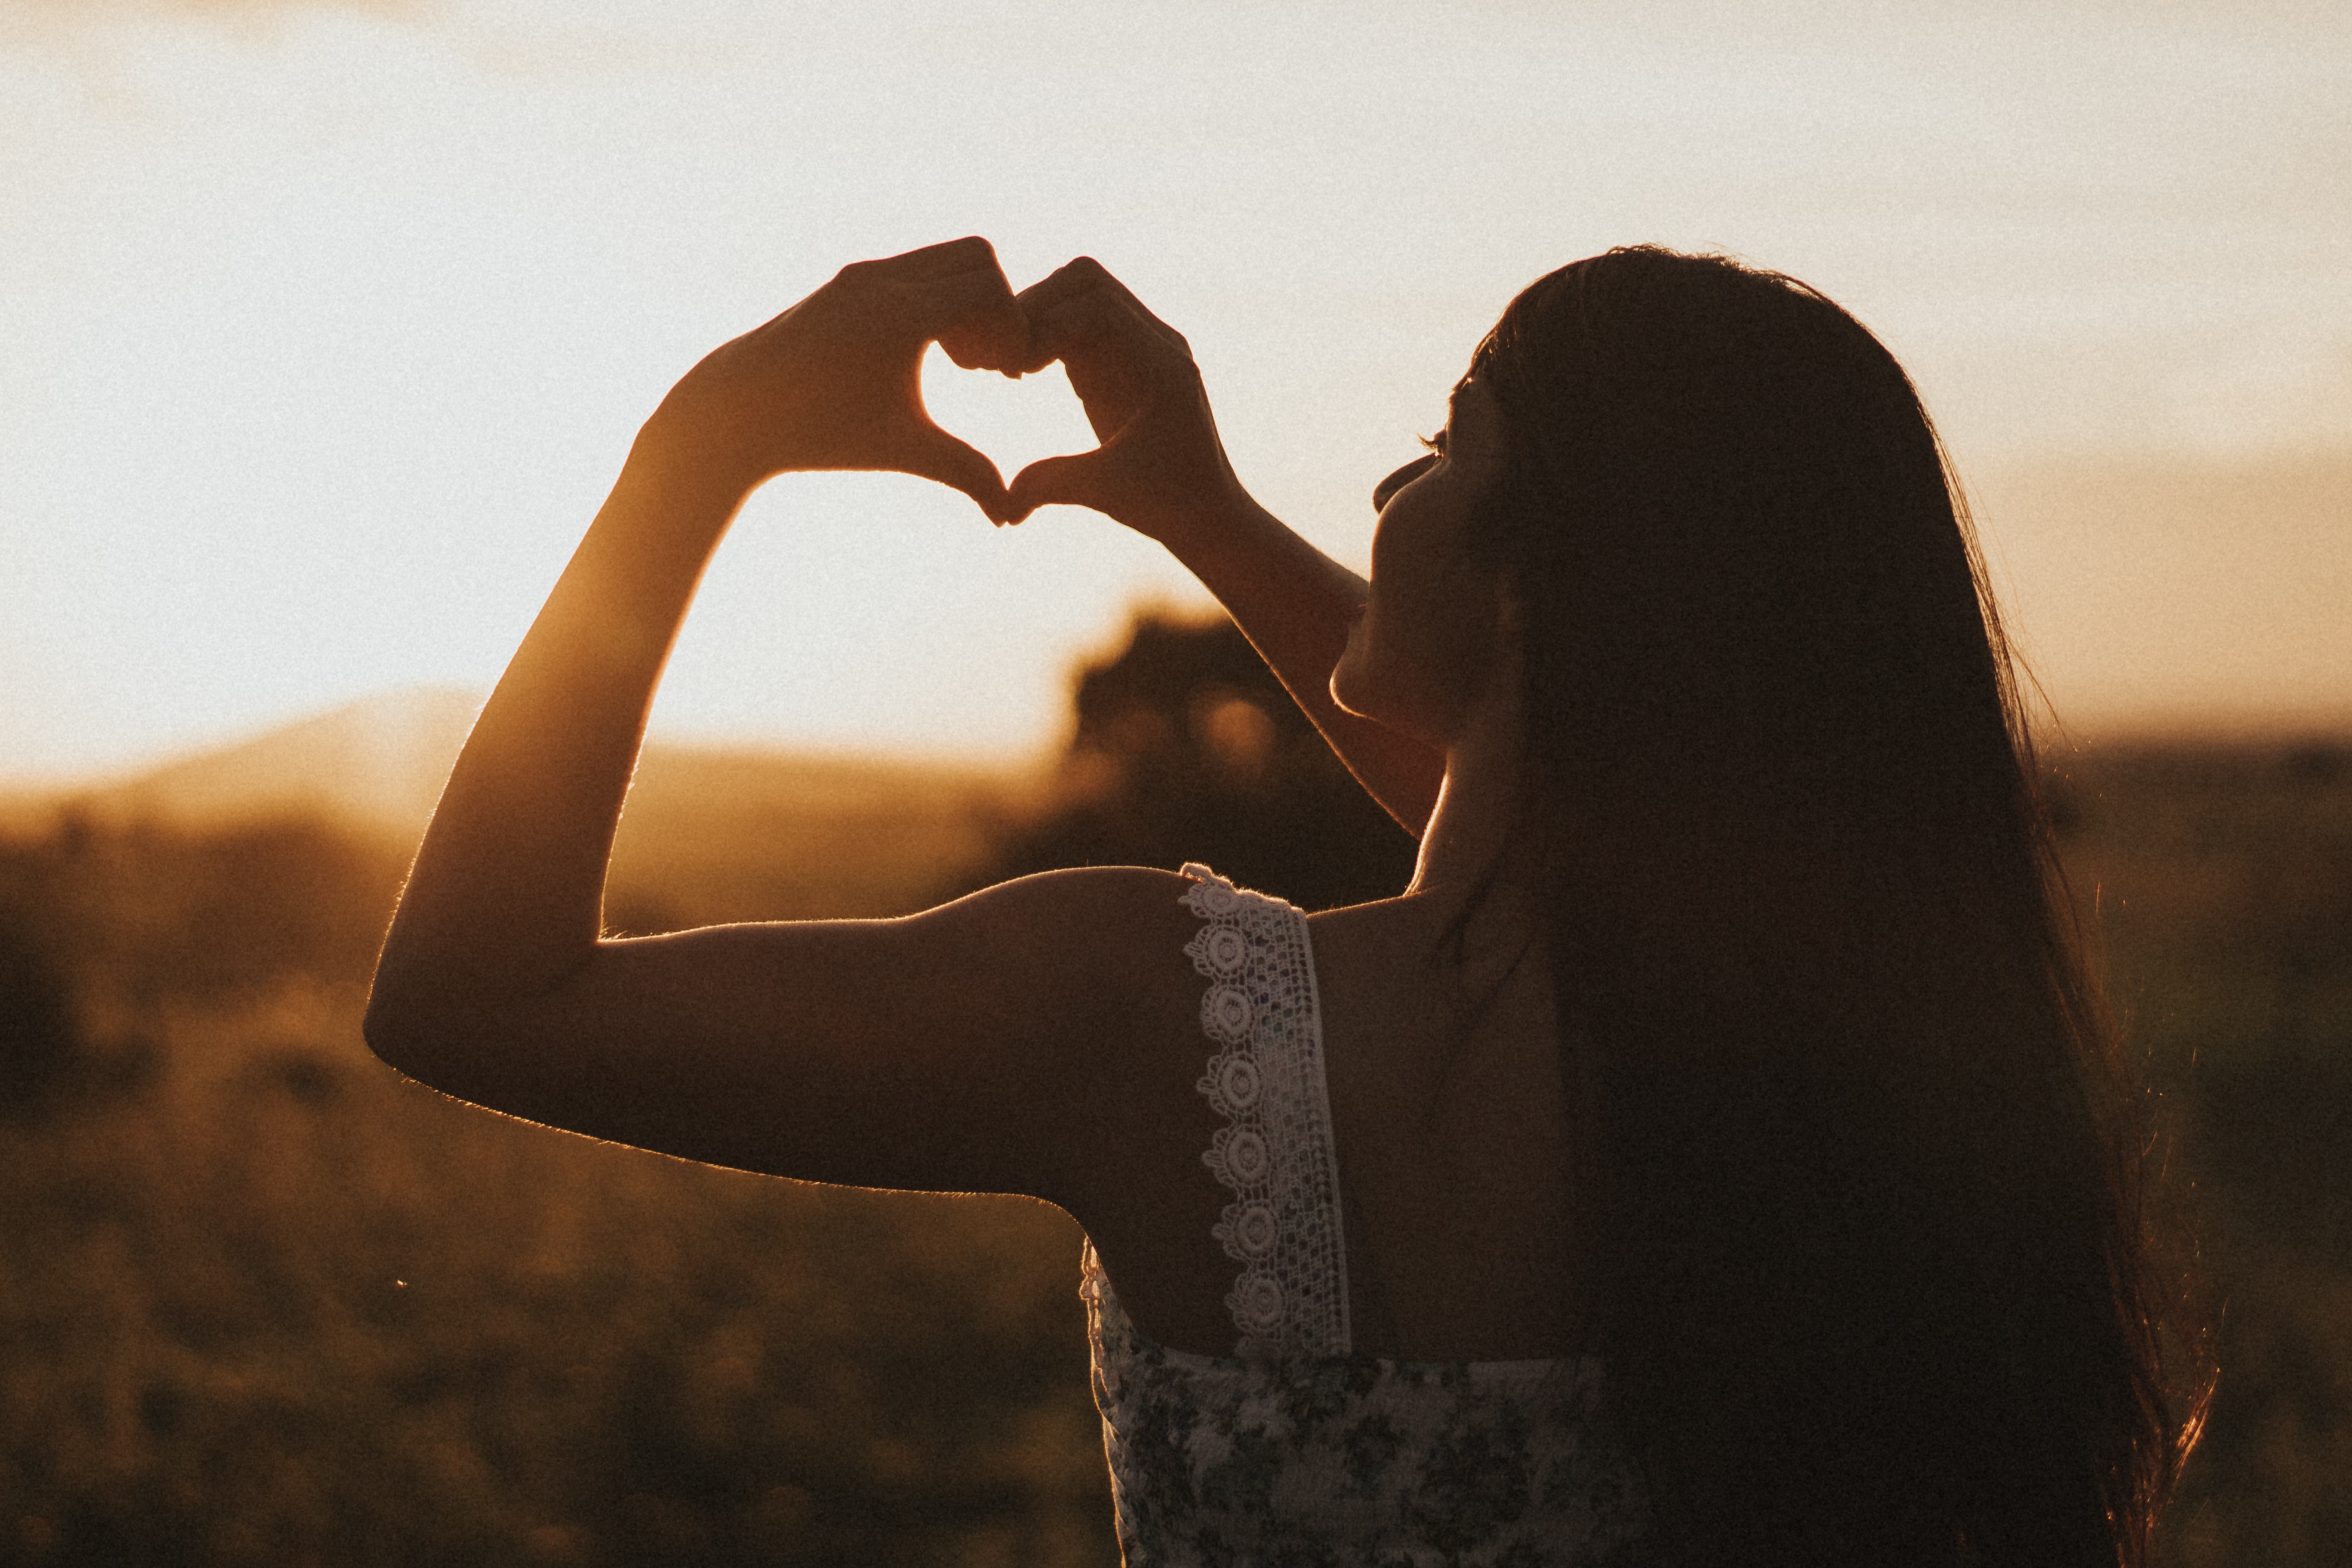 A woman making a heart shape against a sunset sky.